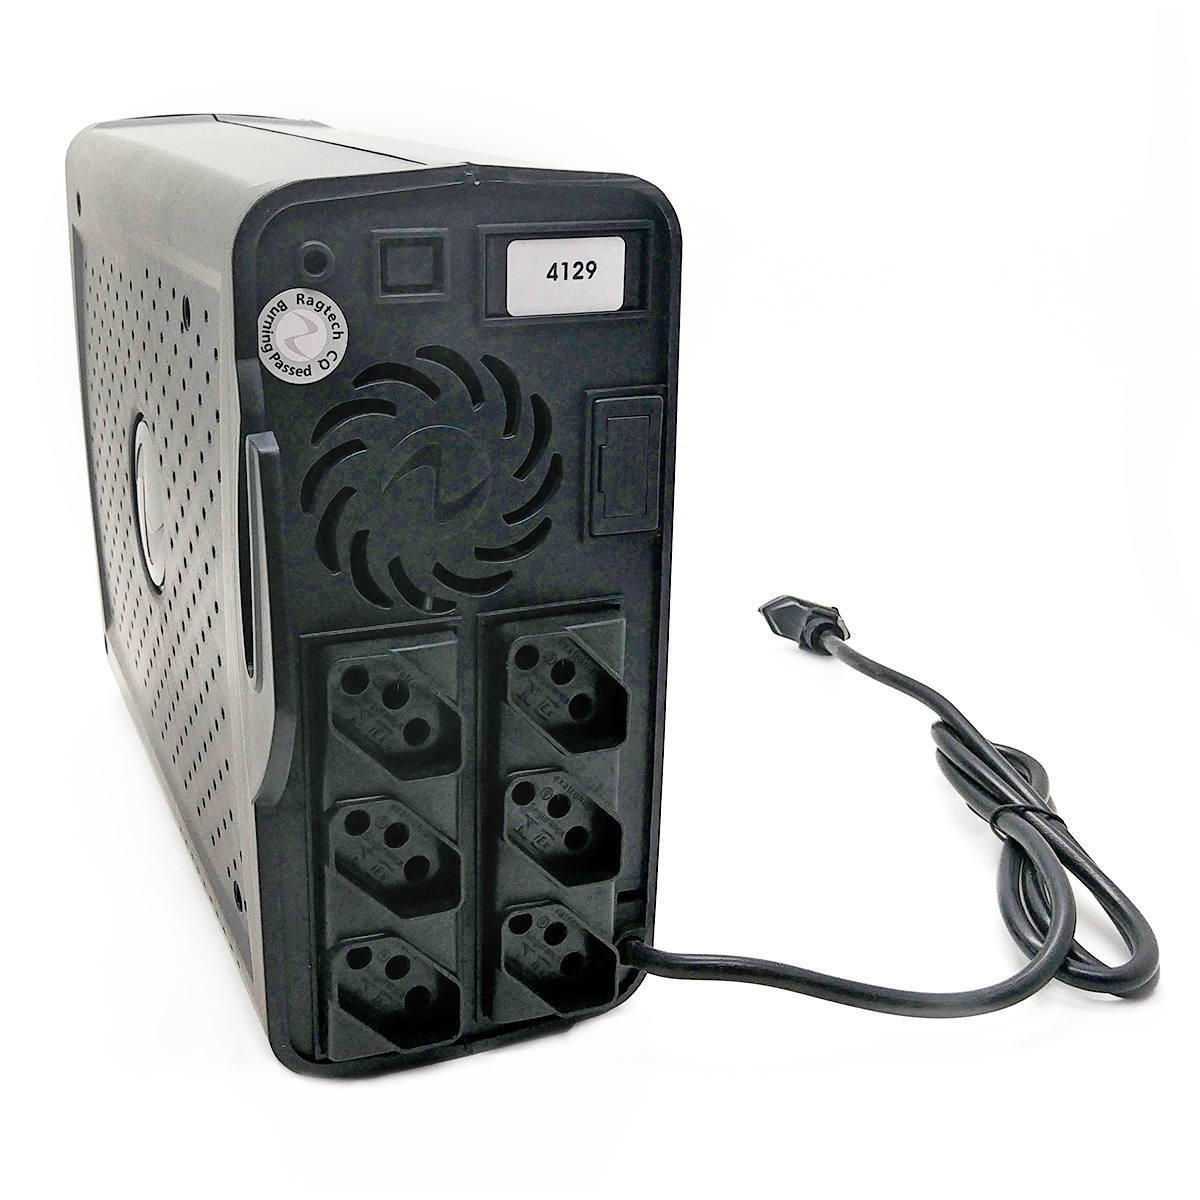 Nobreak 600VA 300W Display Digital 6 Tomadas 3 em 1 Troca Fácil de Bateria Trivolt PWM Ragtech Save Home DIG/STD-TI 4129